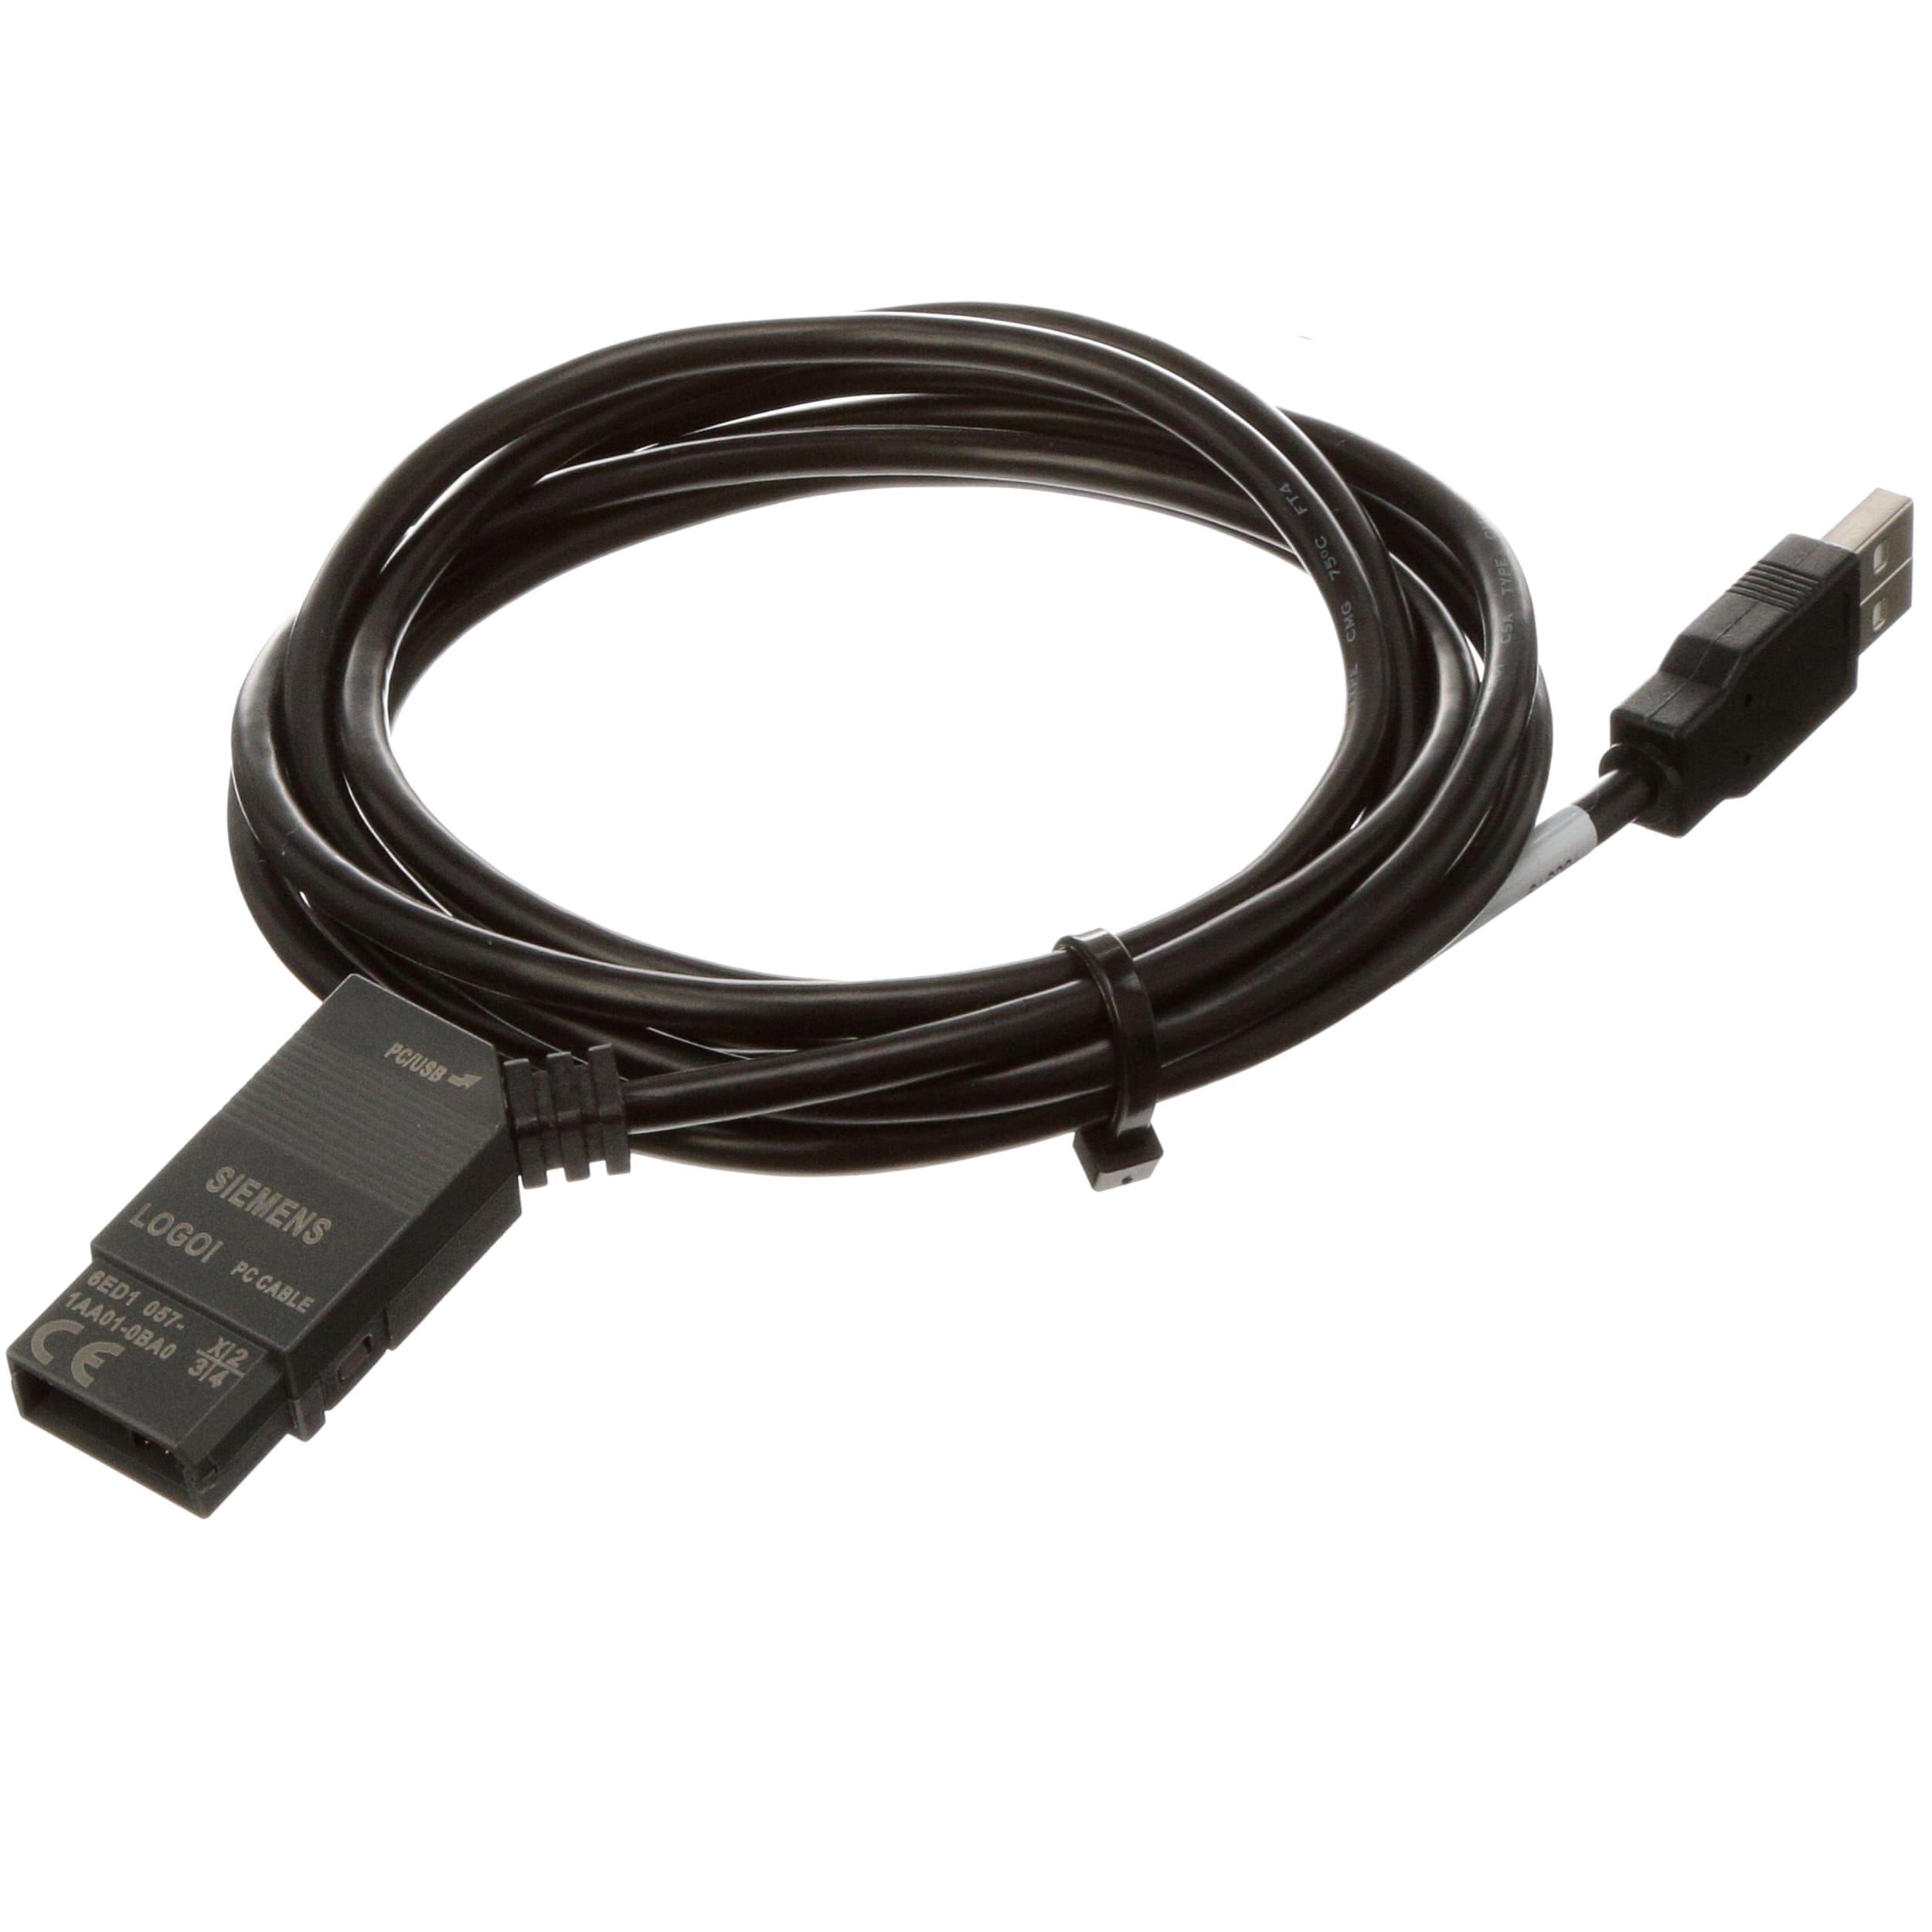 Transmission/Programming Cable For PLC PC USB Siemens LOGO 